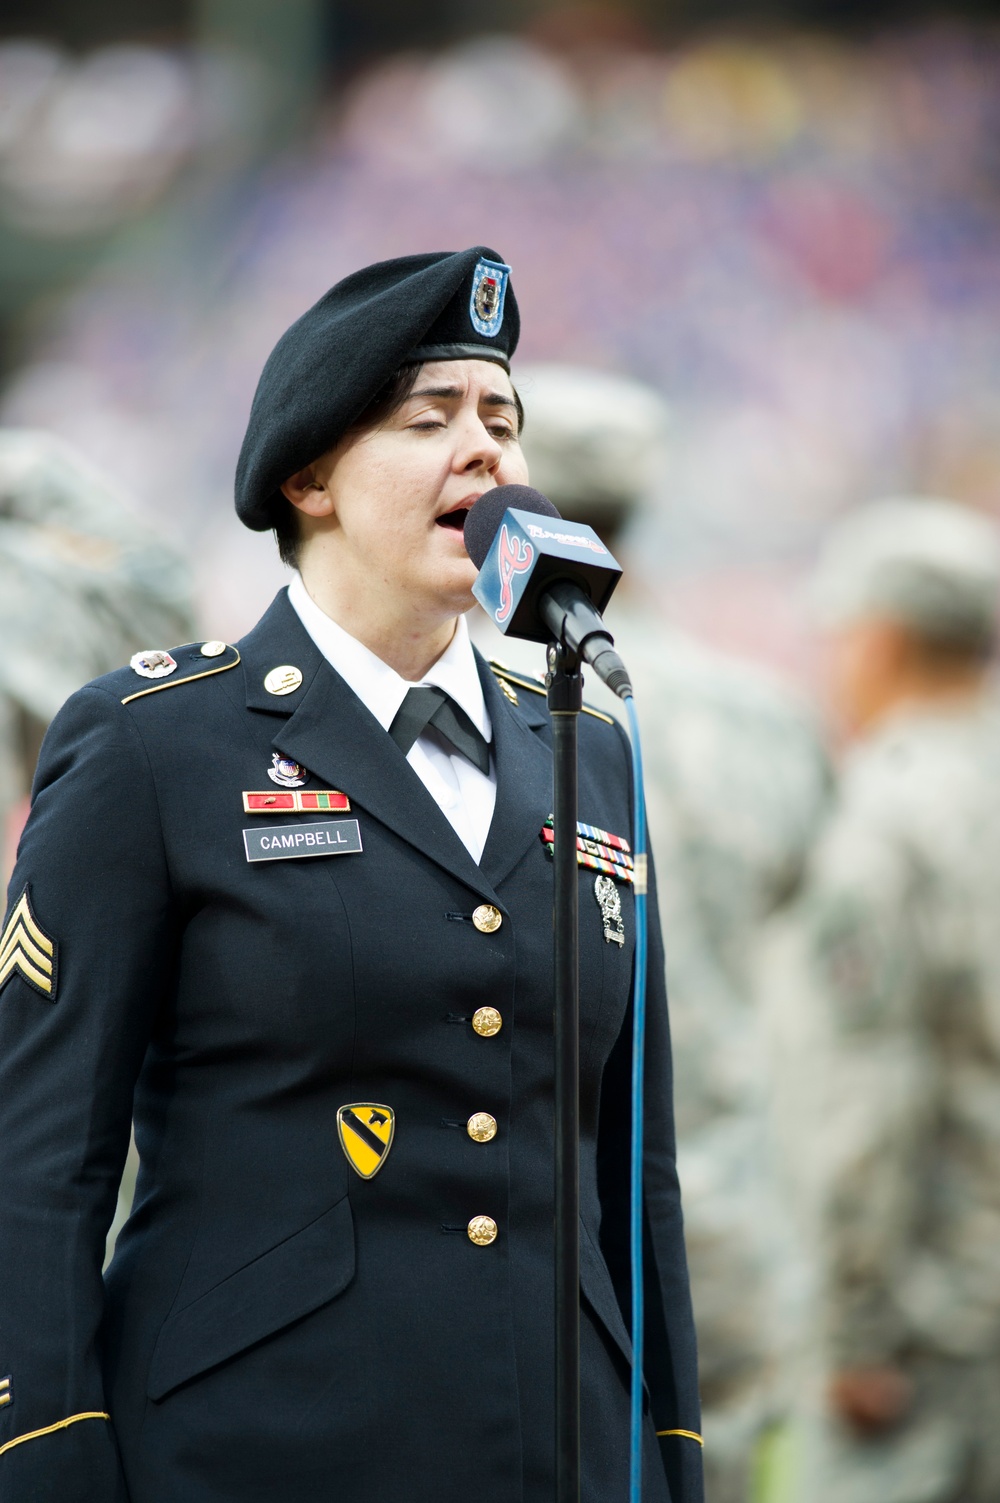 Atlanta Braves honors US Army's 239th birthday